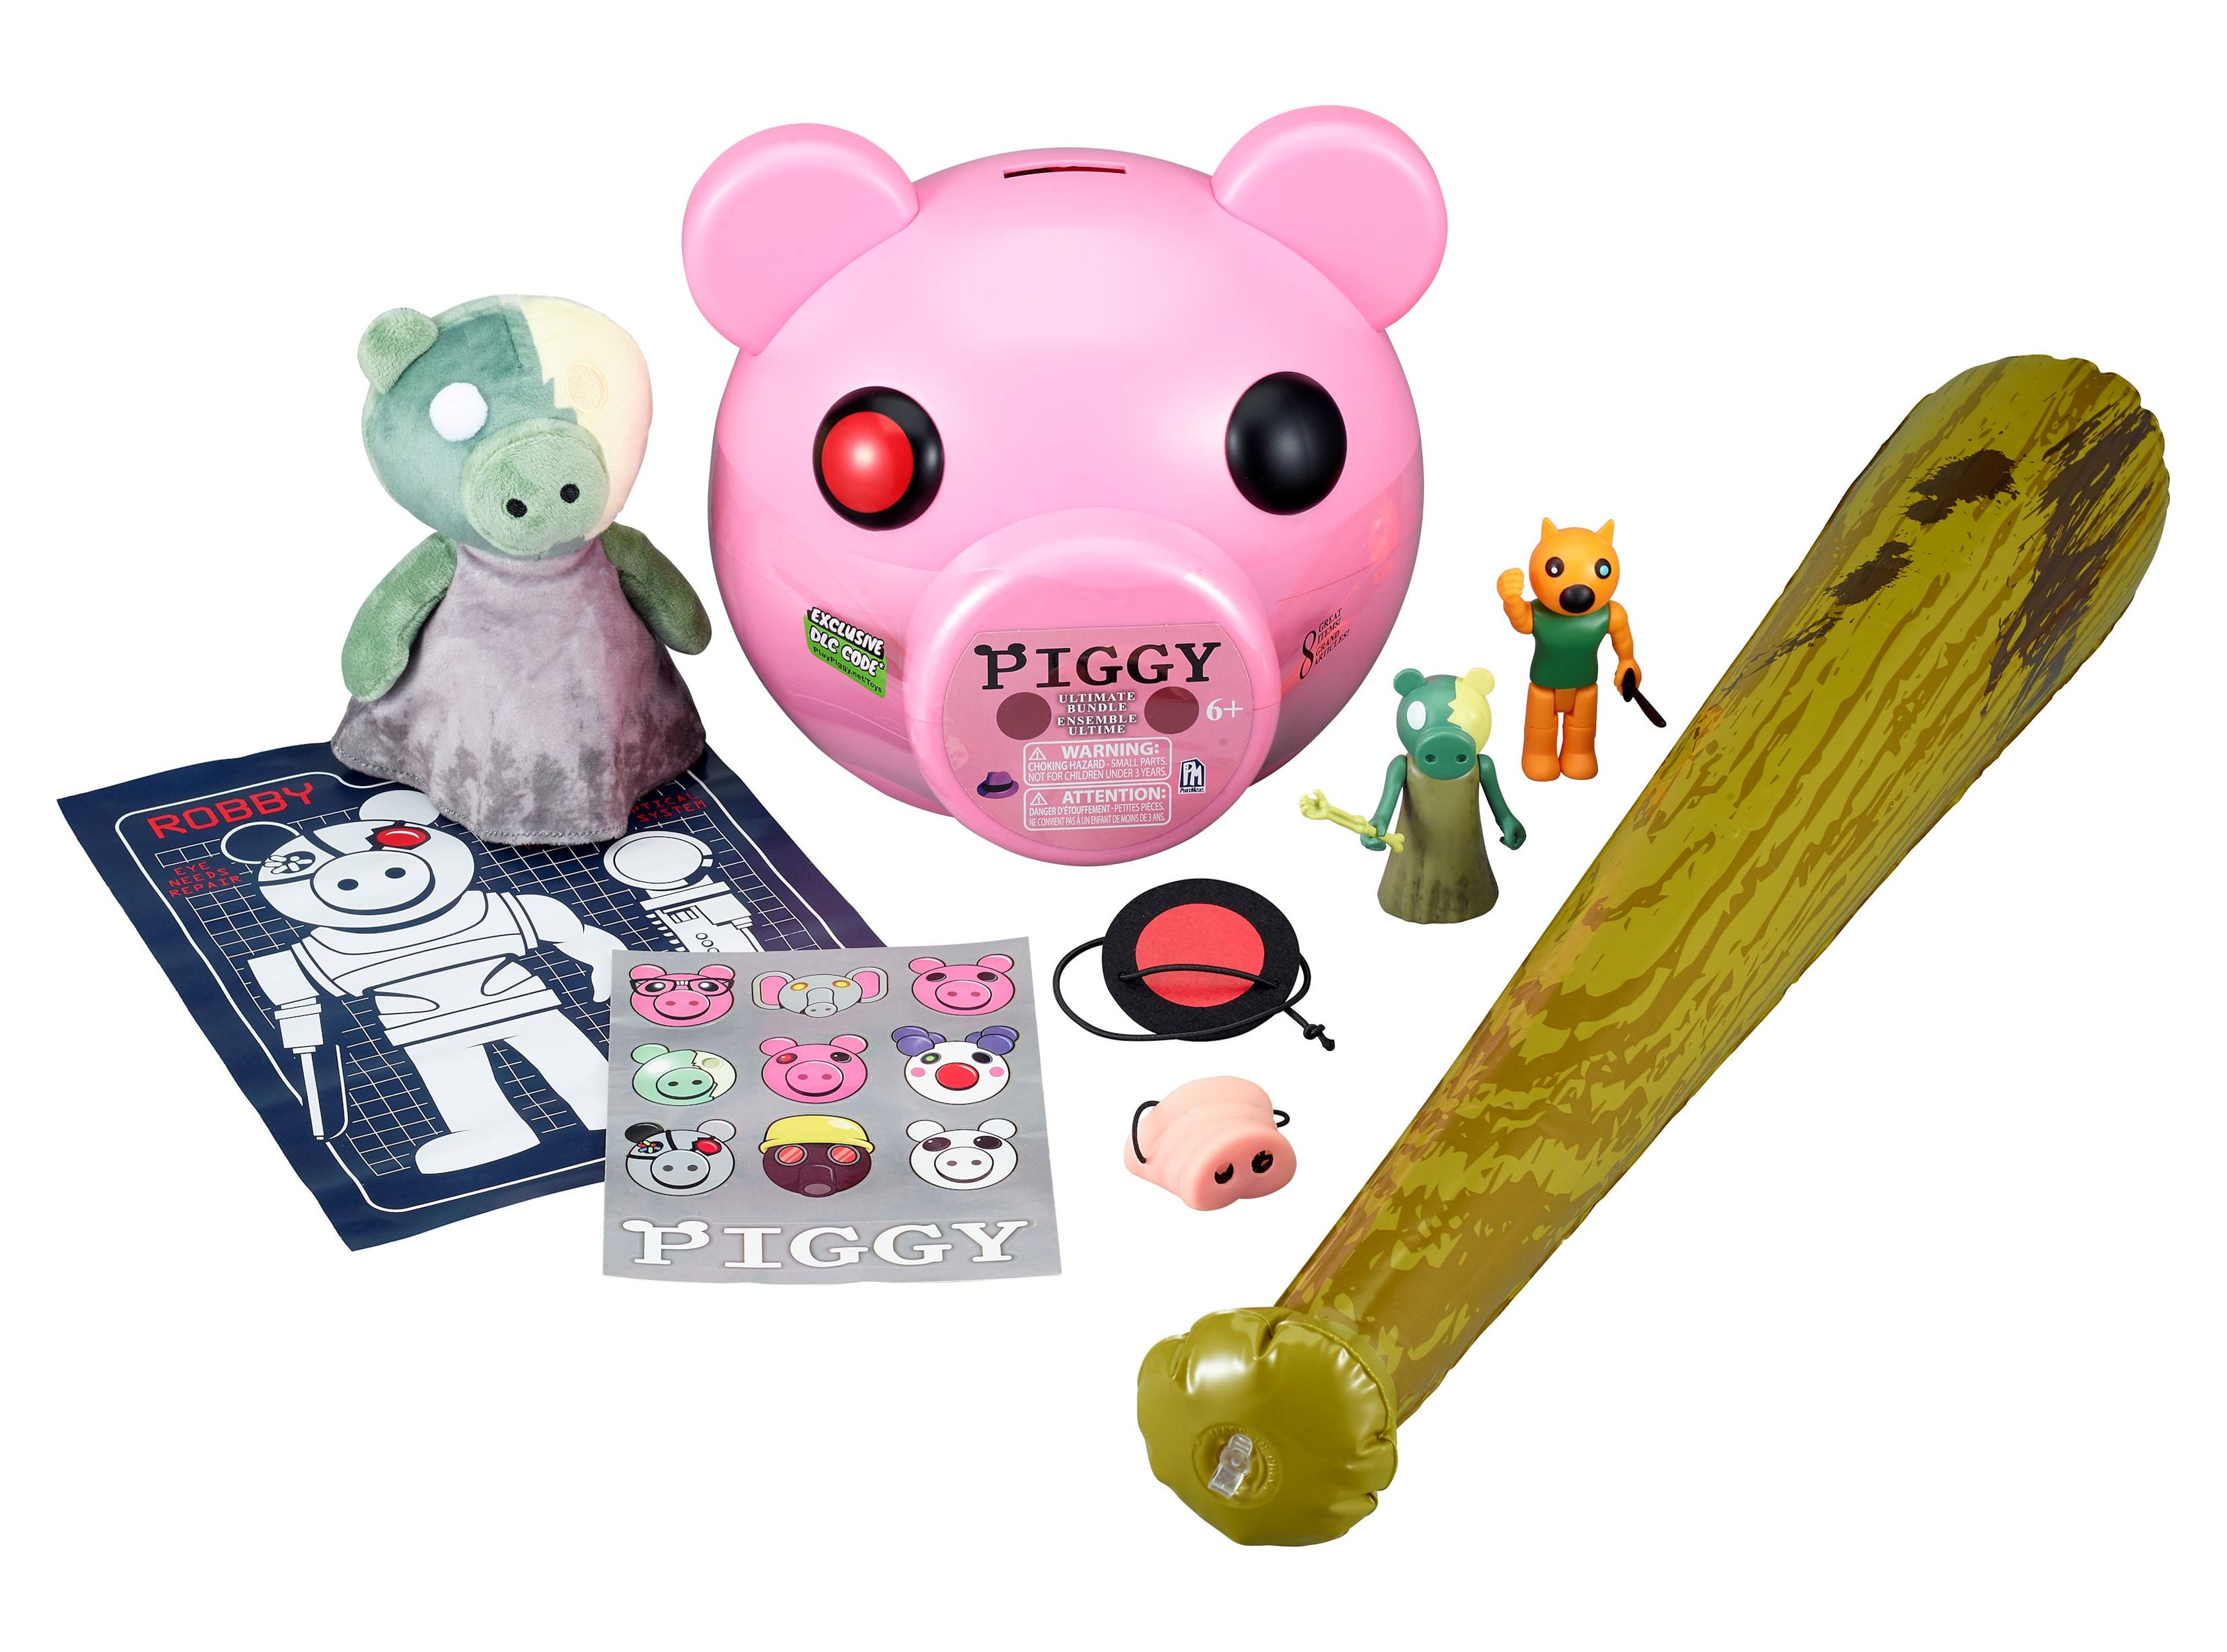 PIGGY - Piggy Head Bundle (Contains 8 Items, Series 1, Includes DLC Items) - image 1 of 4